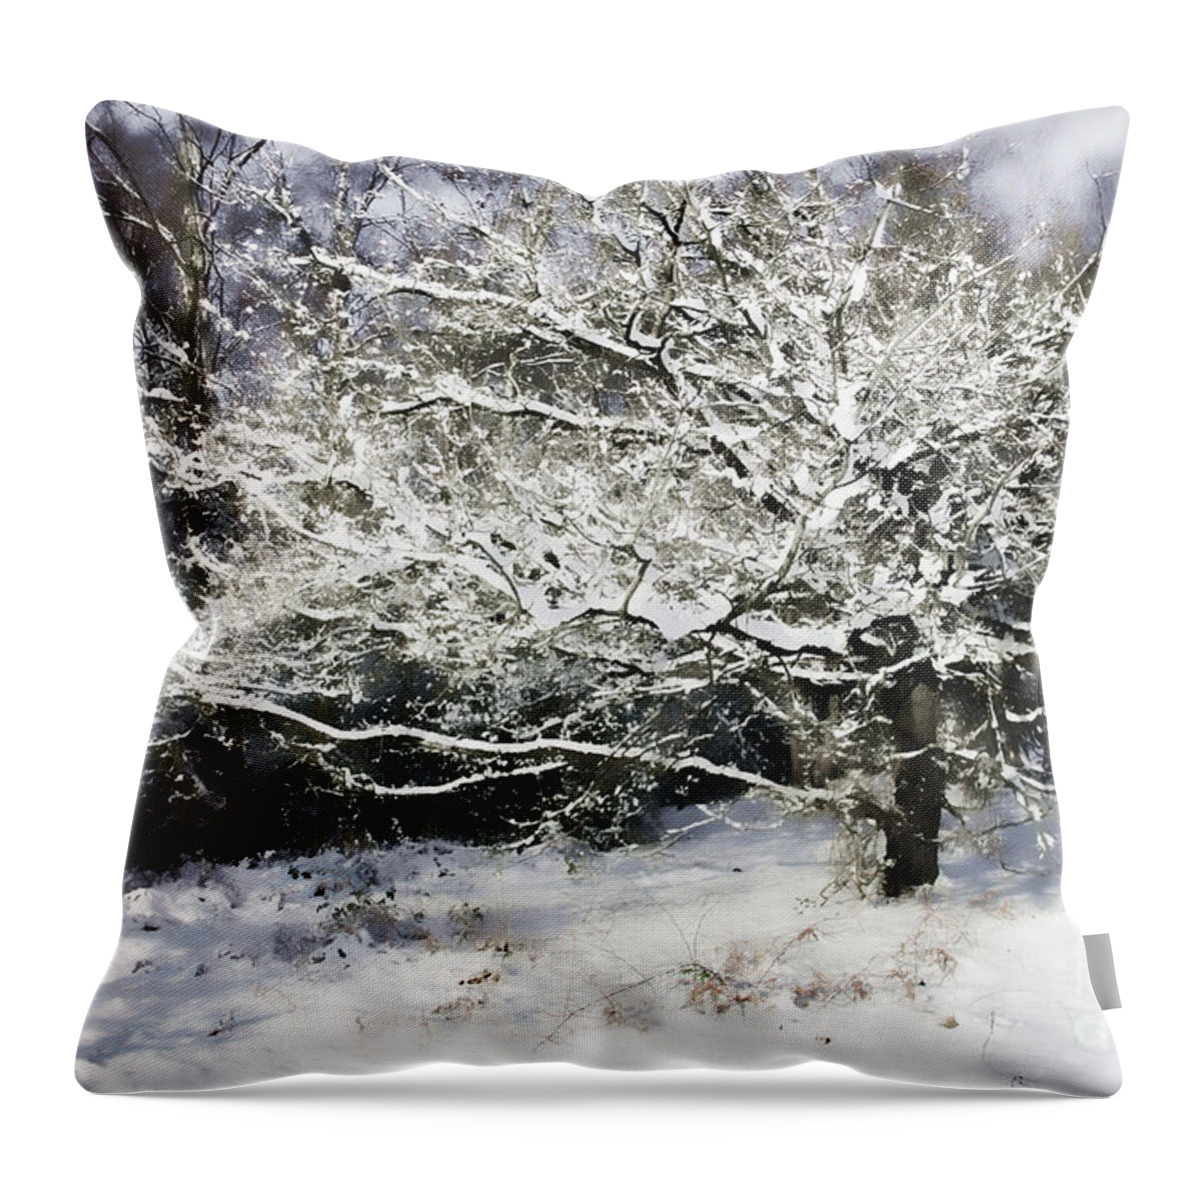 Snow Throw Pillow featuring the digital art Snow Tree by Ann Garrett